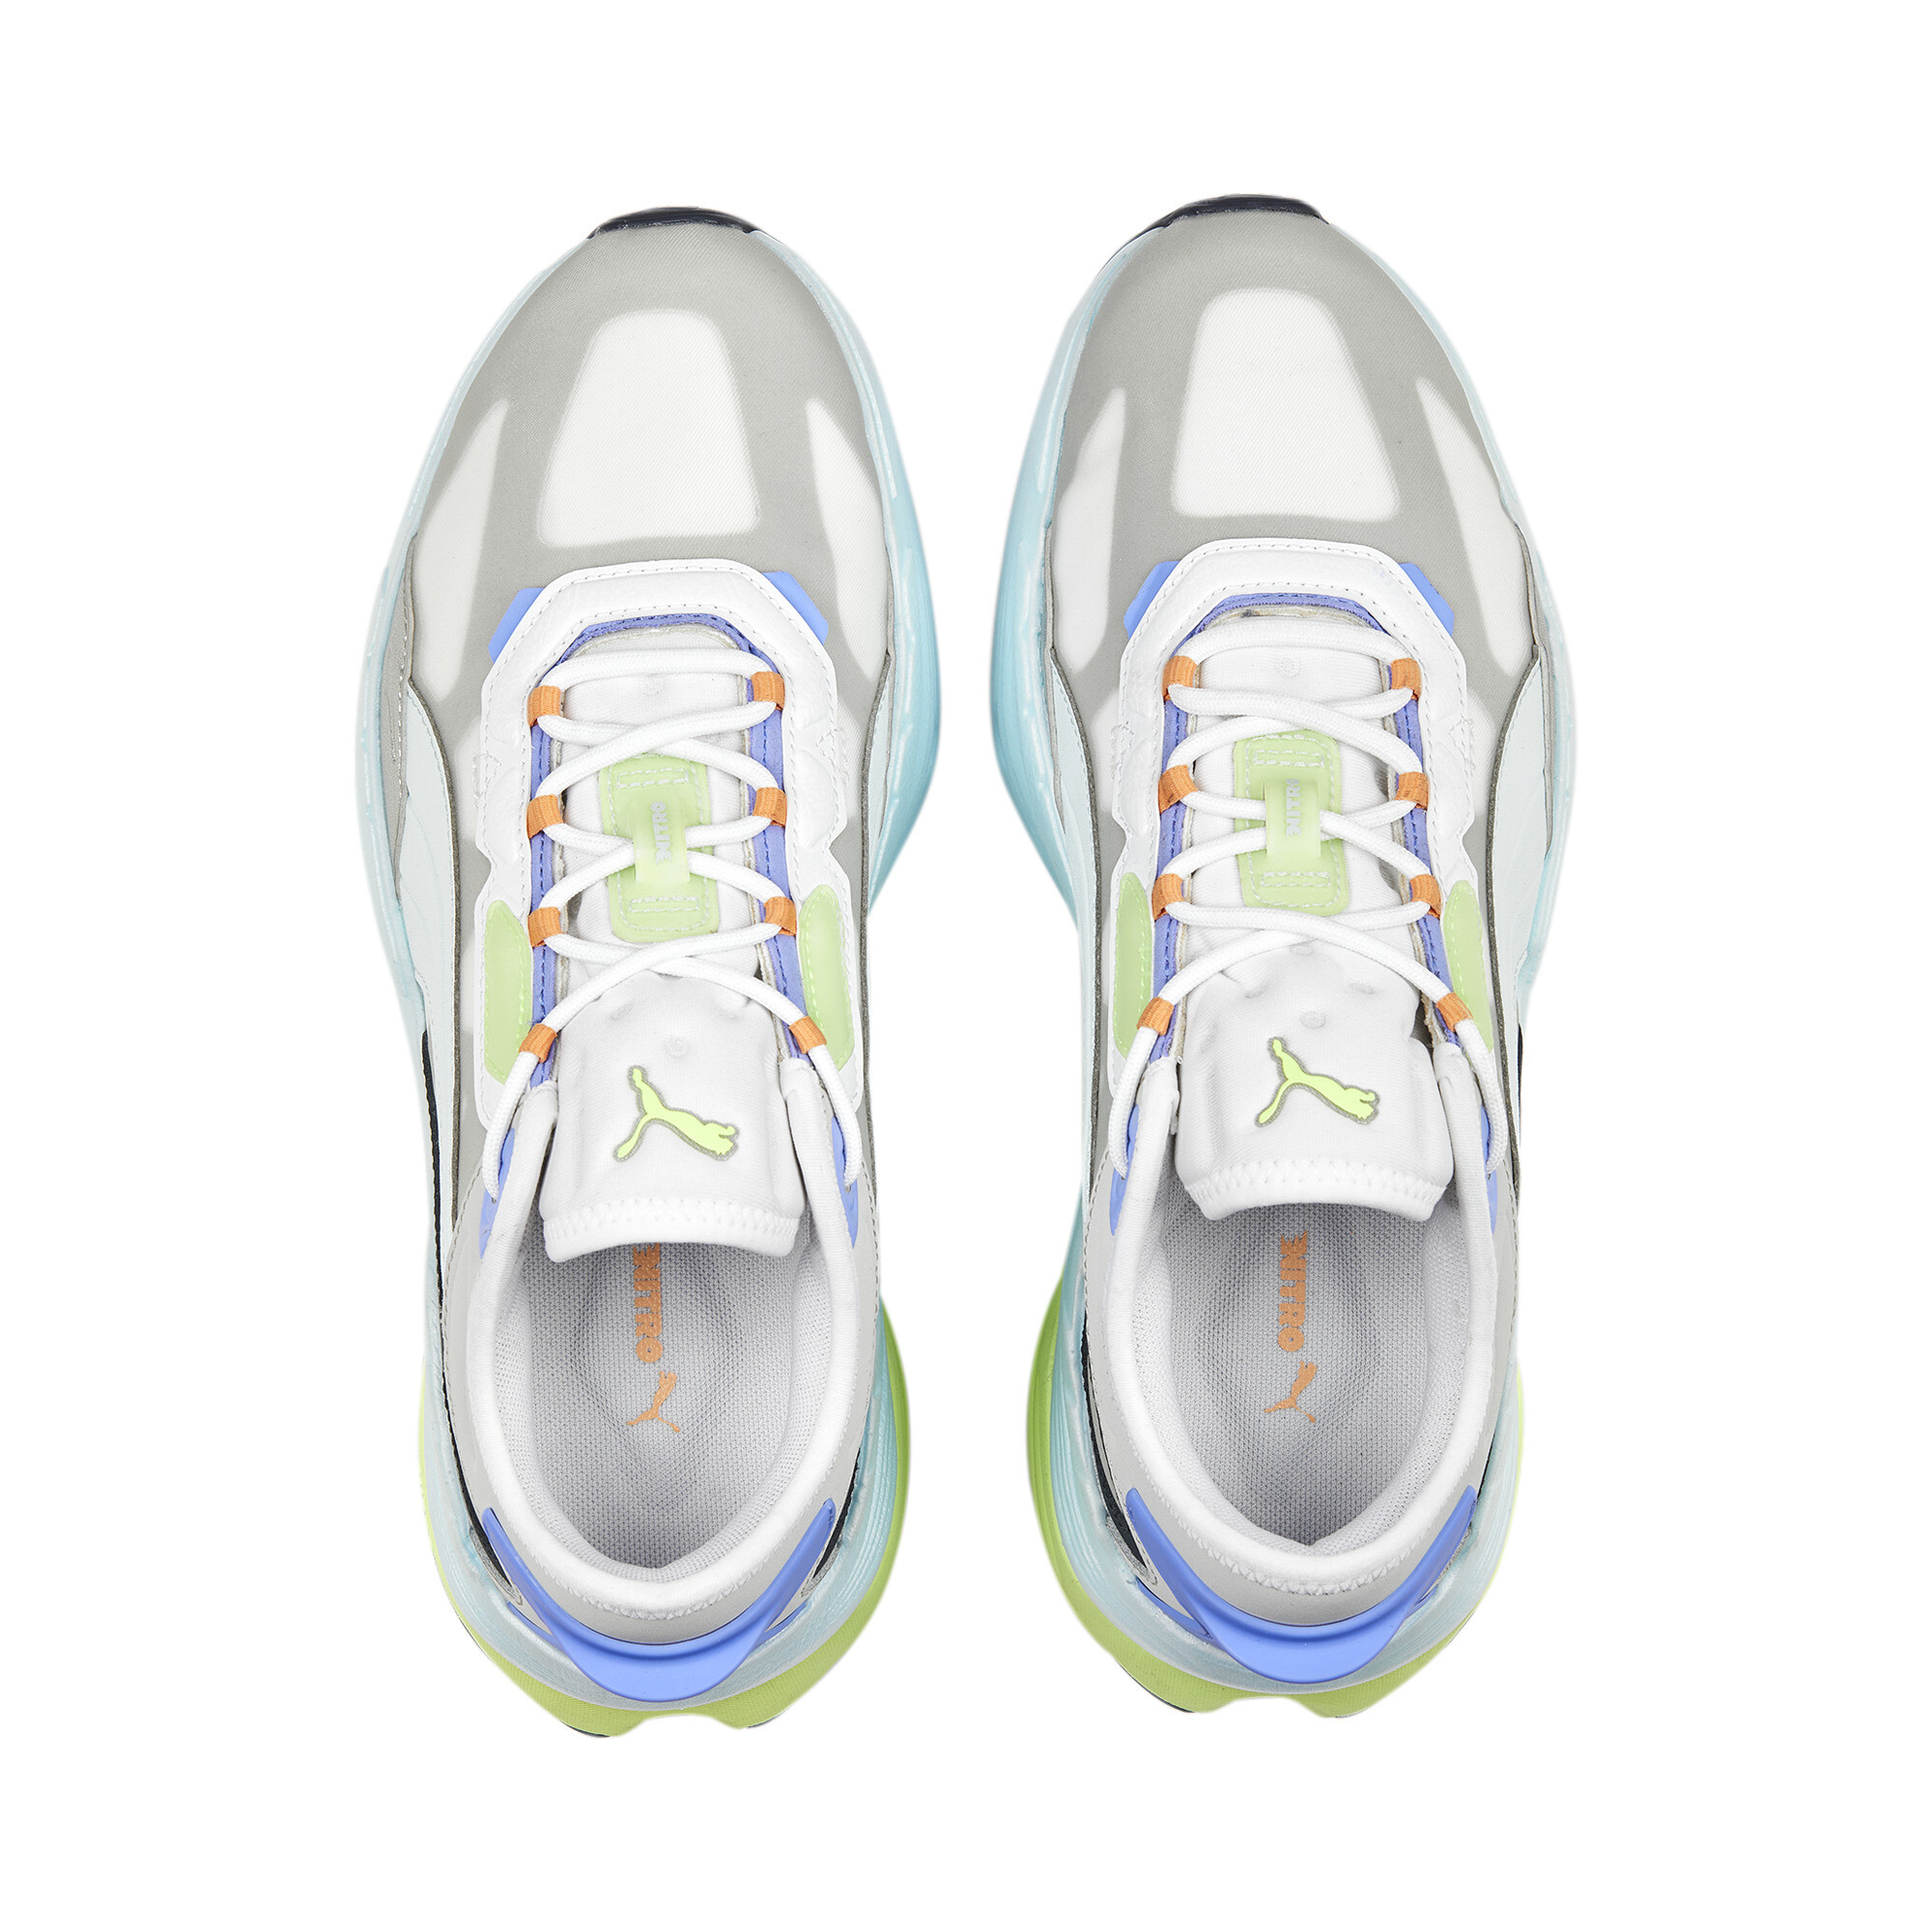 Men's PUMA Extent NITRO Easter Goodies Sneakers In White, Size EU 43